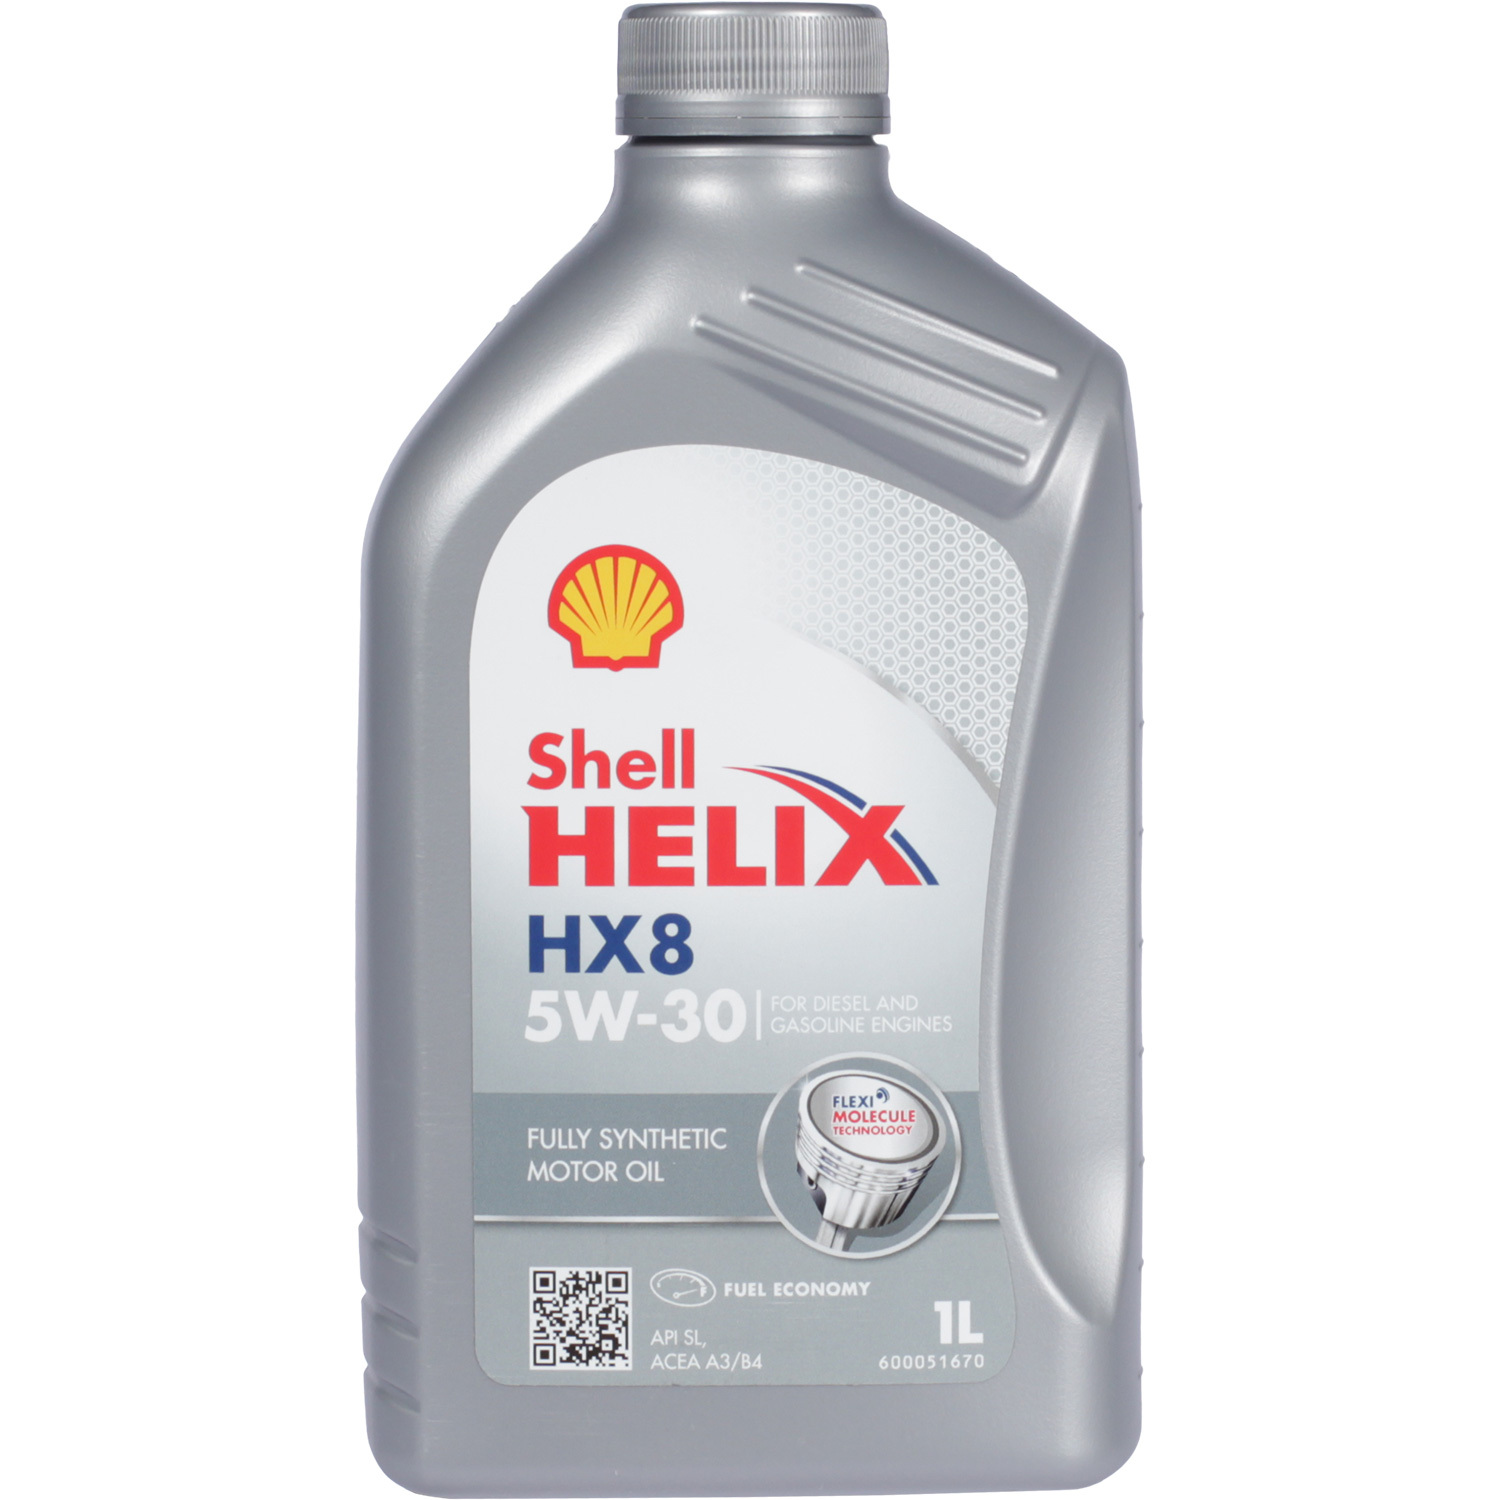 Shell Моторное масло Shell Helix HX8 5W-30, 1 л моторное масло shell helix hx8 ect 5w 30 4 л синтетическое